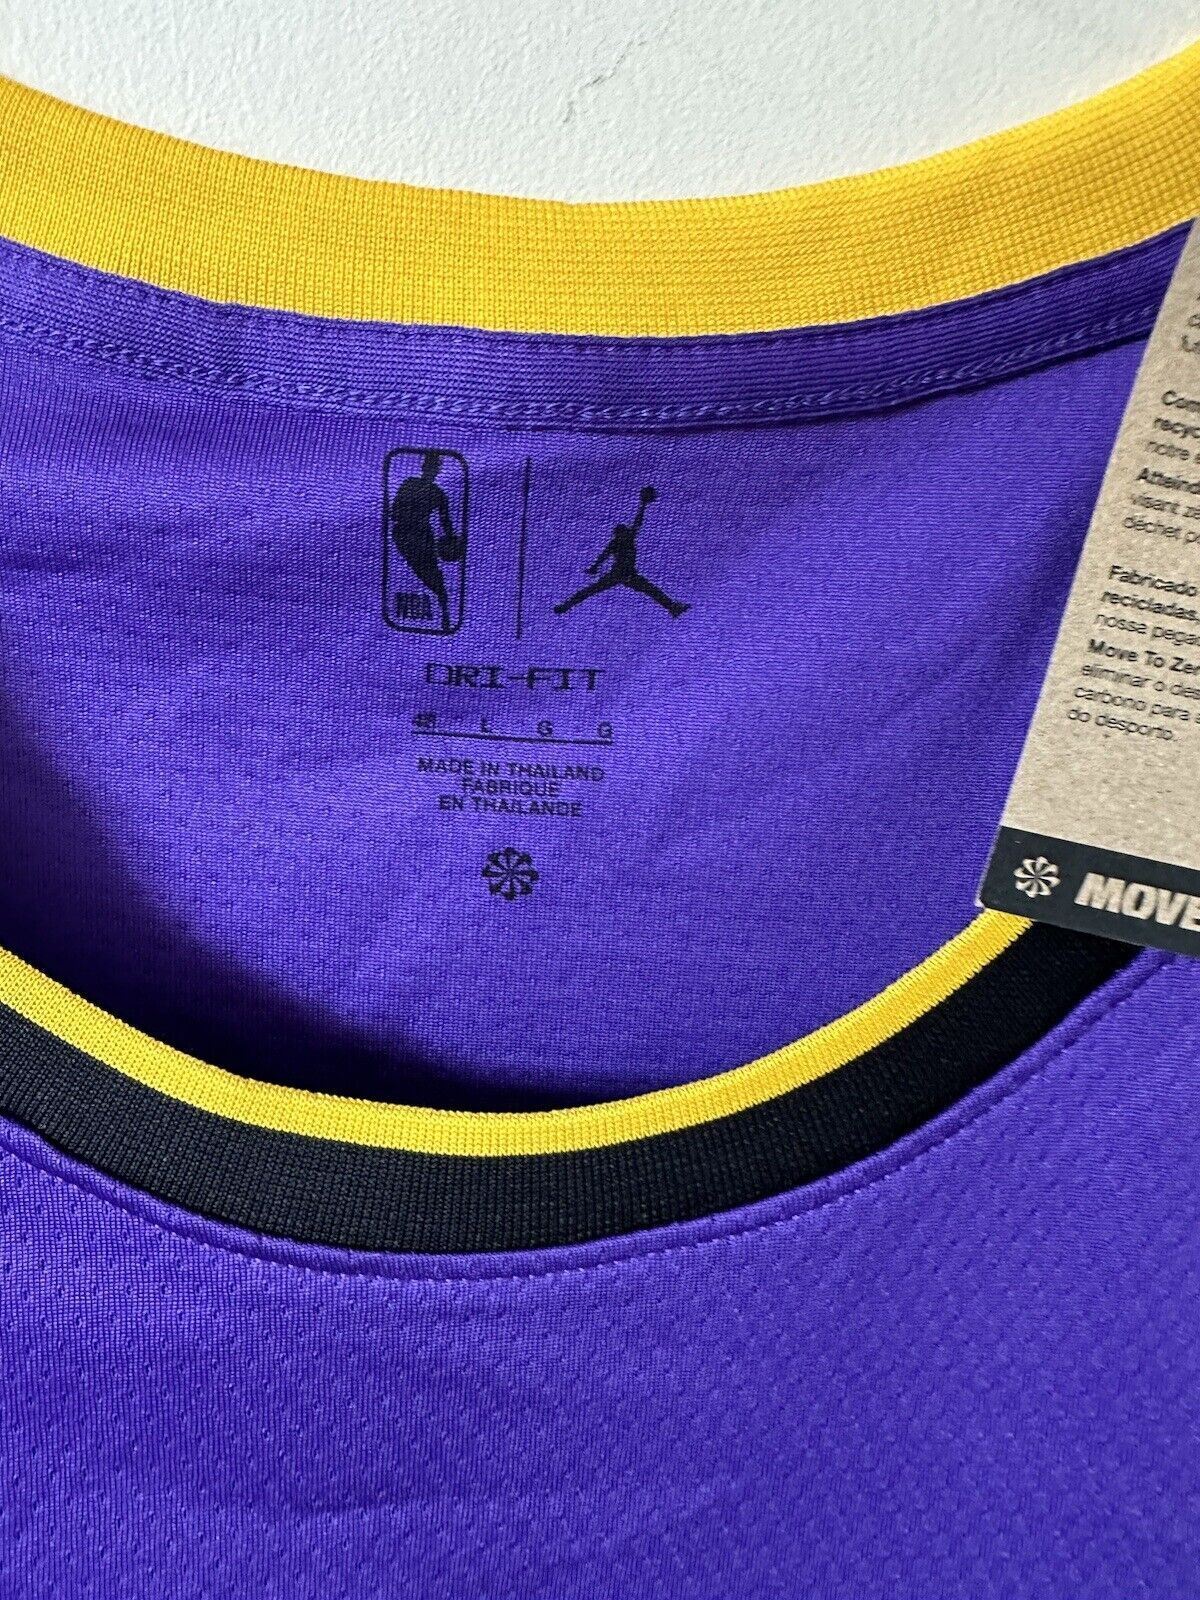 Nike Jordan NBA LA Lakers Statement Edition Jersey TWIN ONE 01 Men’s Large